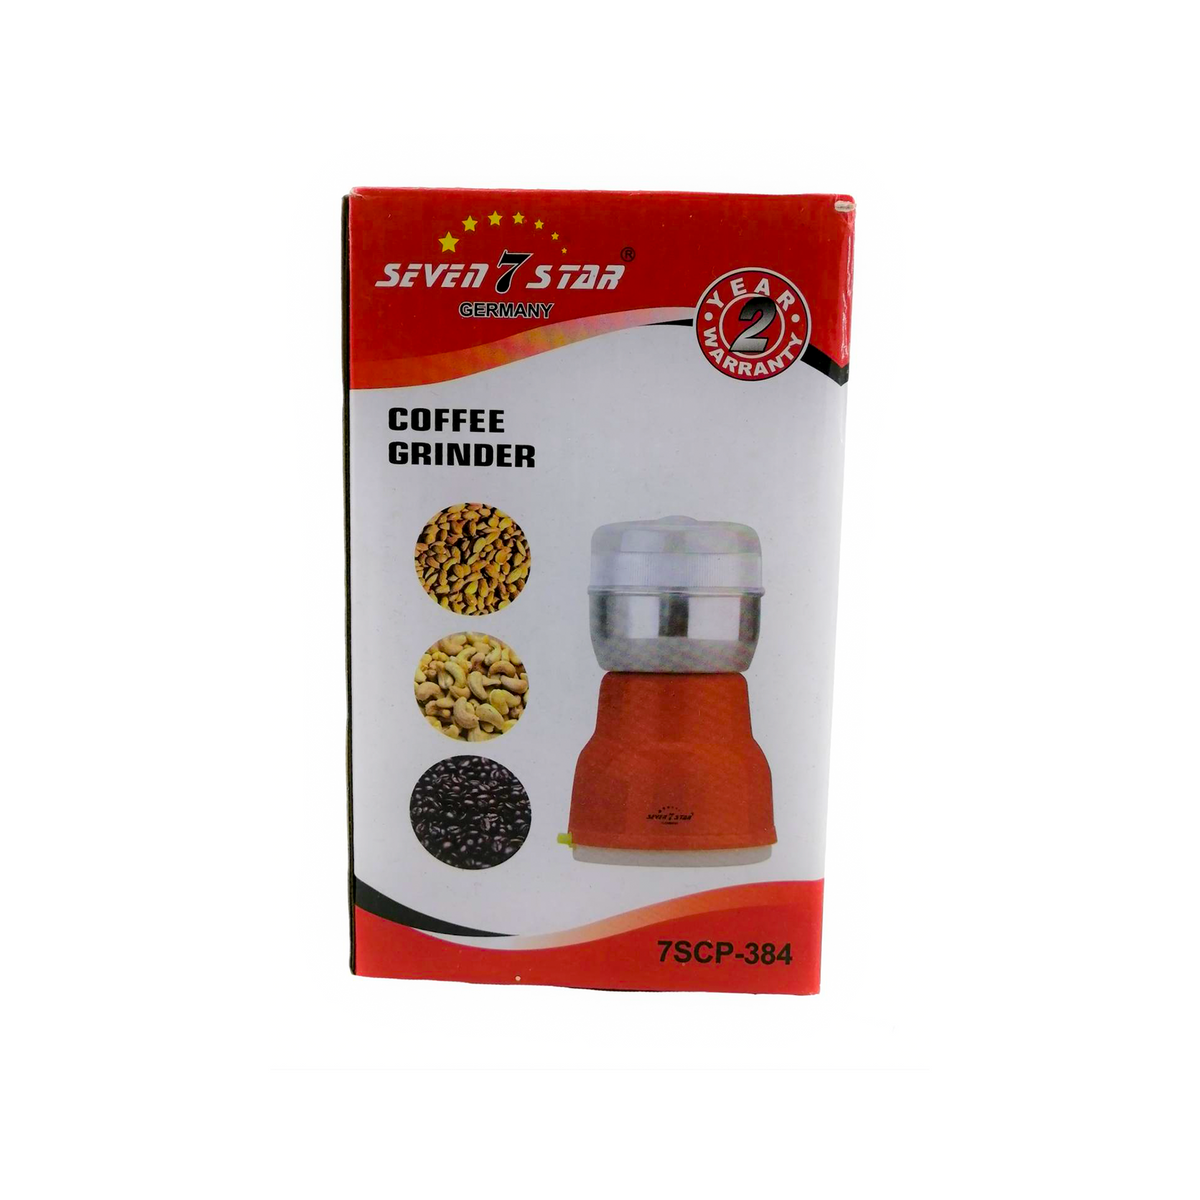 Seven Star Coffee Grinder 7Scp-384